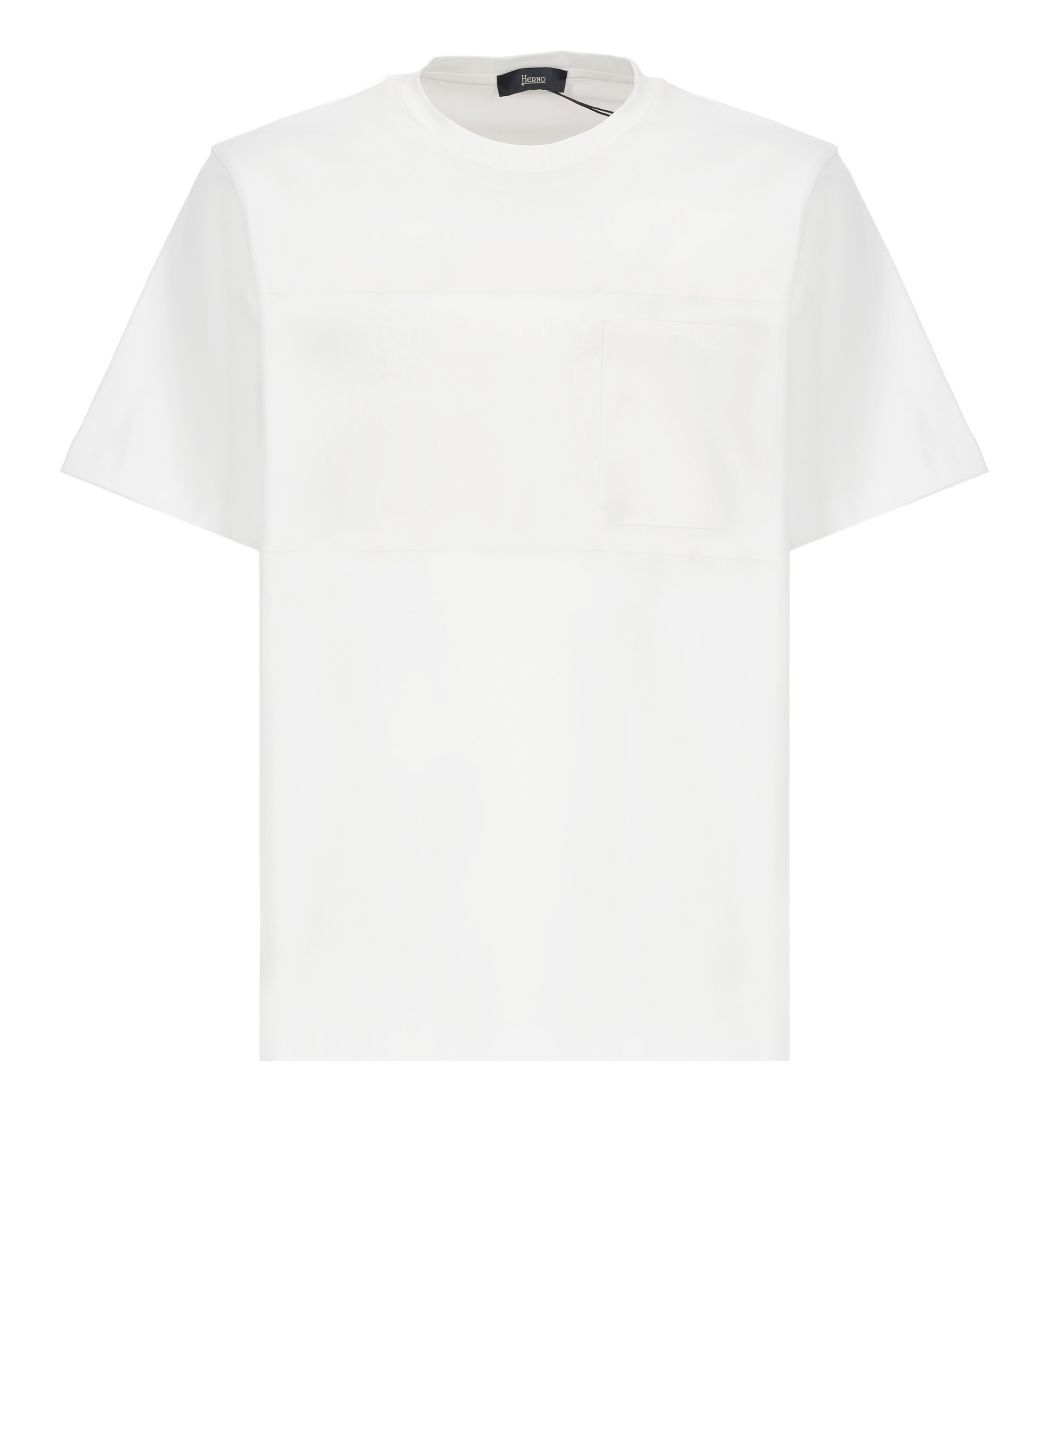 Cotton t-shirt